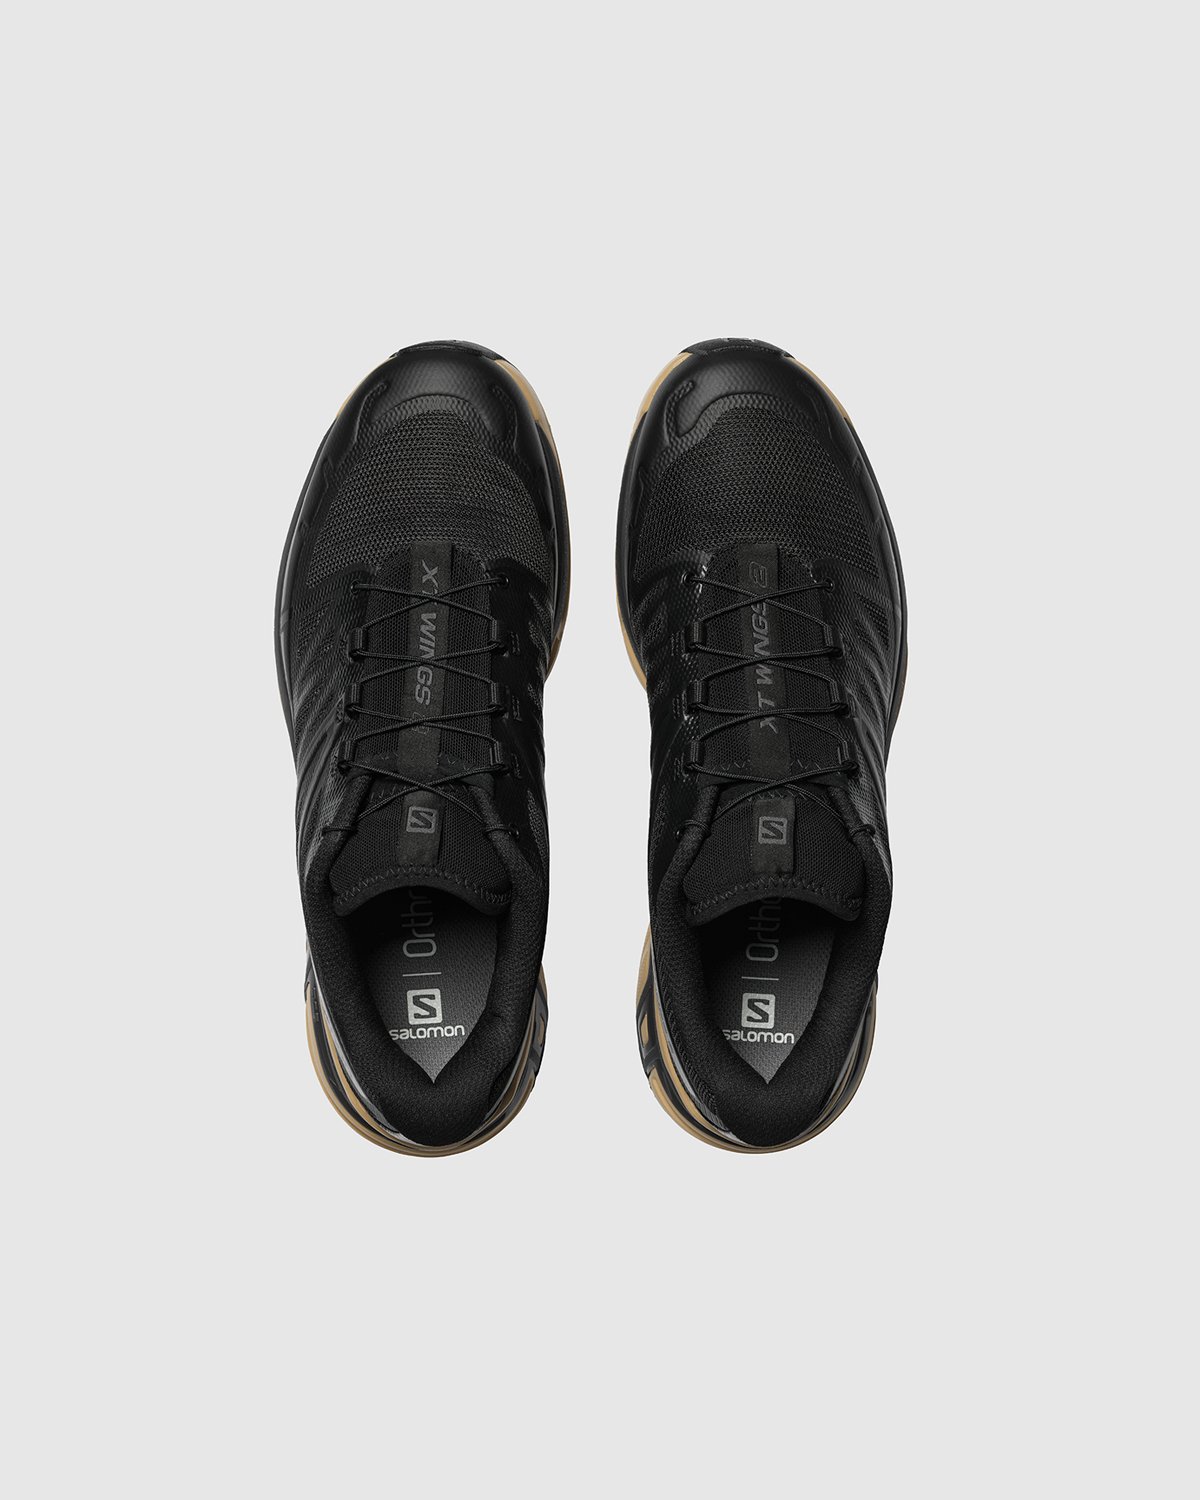 Salomon - XT-WINGS 2 ADVANCED Black/Safari/Magnet - Footwear - Black - Image 3